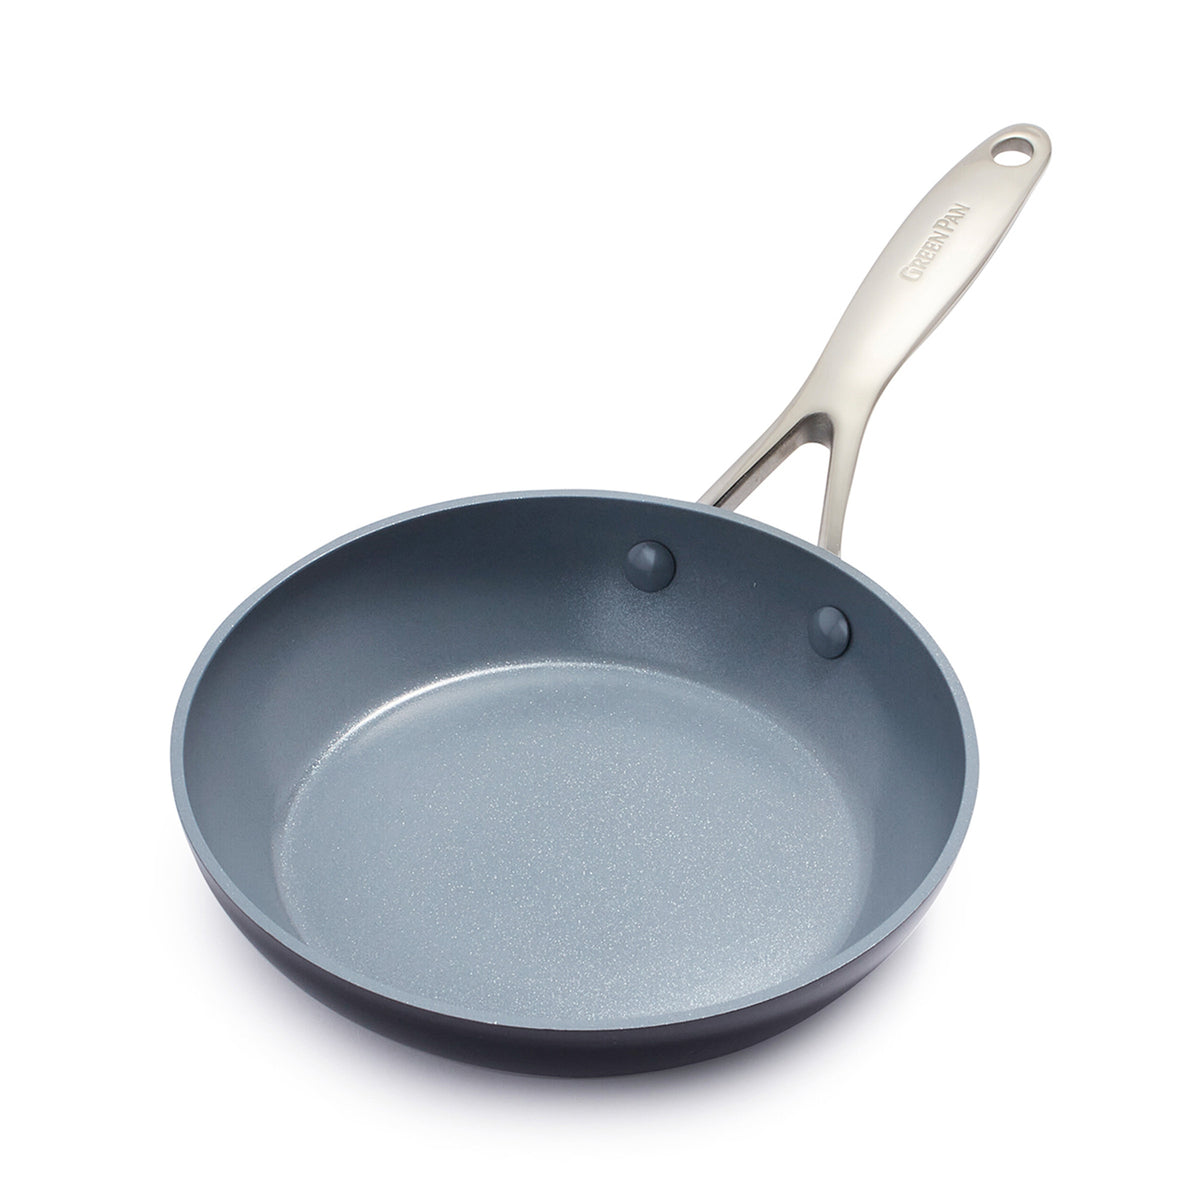 Evaco / Cast Non-Stick Ceramic Fry Pan, 8